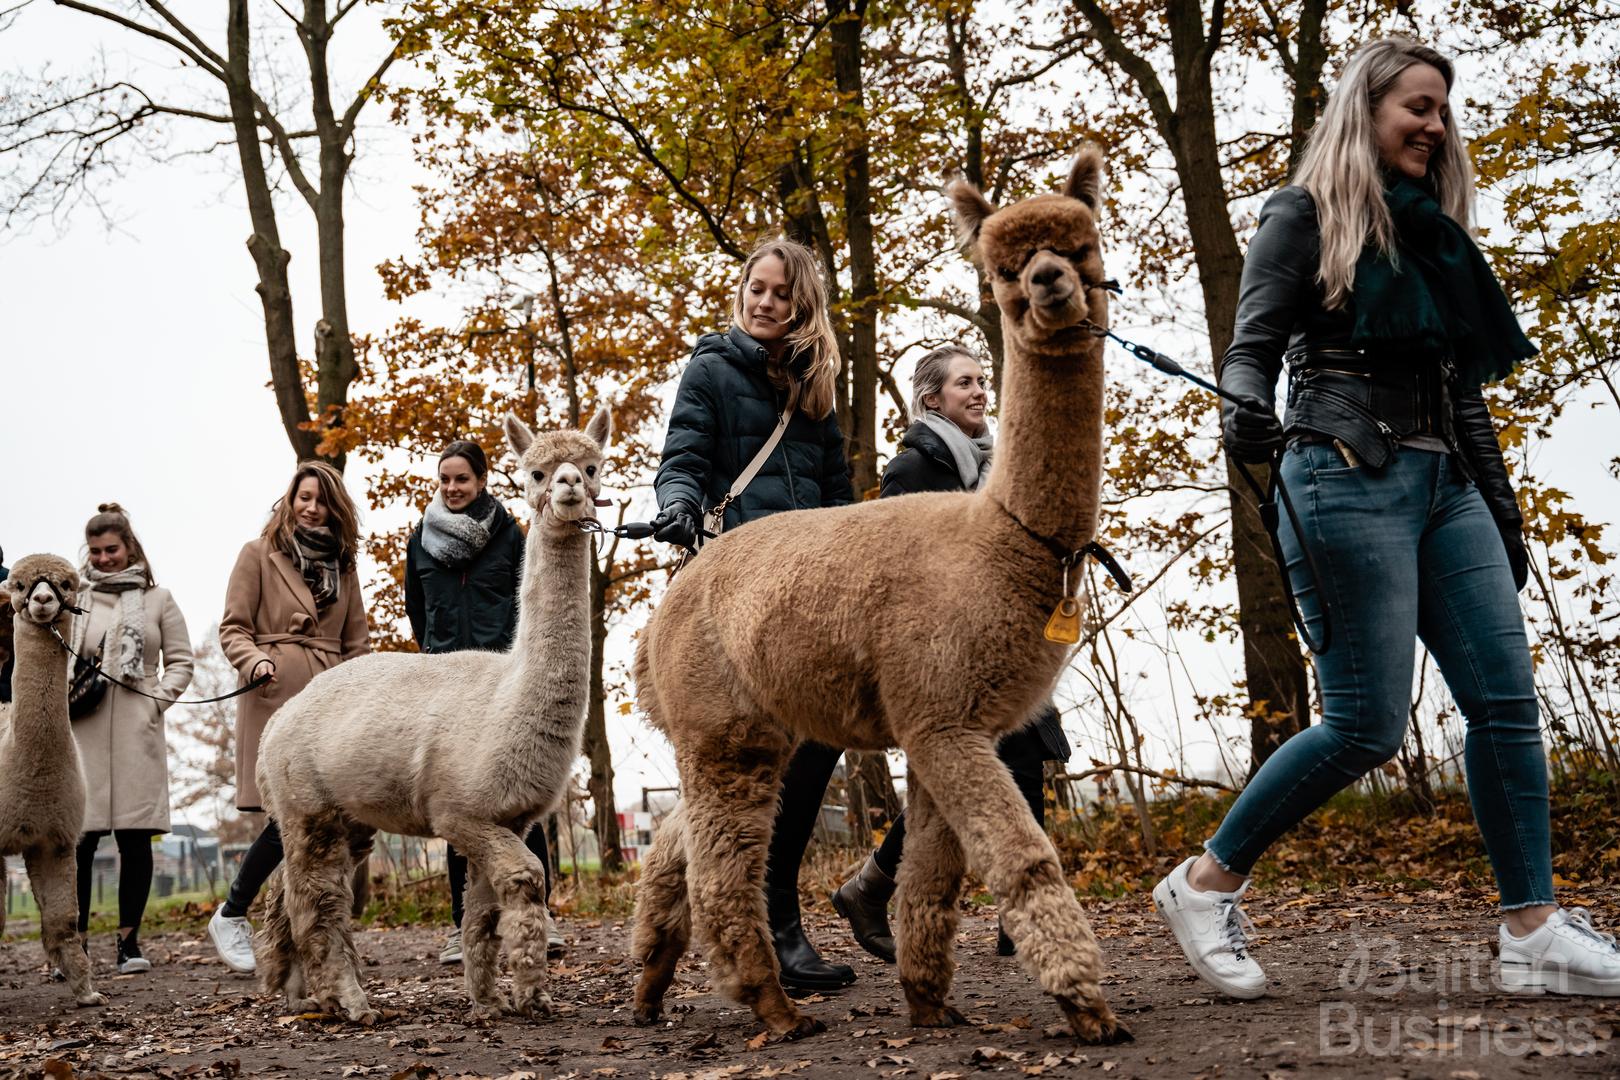 Vergaderen bij Alpacafarm Vorstenbosch in Vorstenbosch, Noord-Brabant via BuitenBusiness